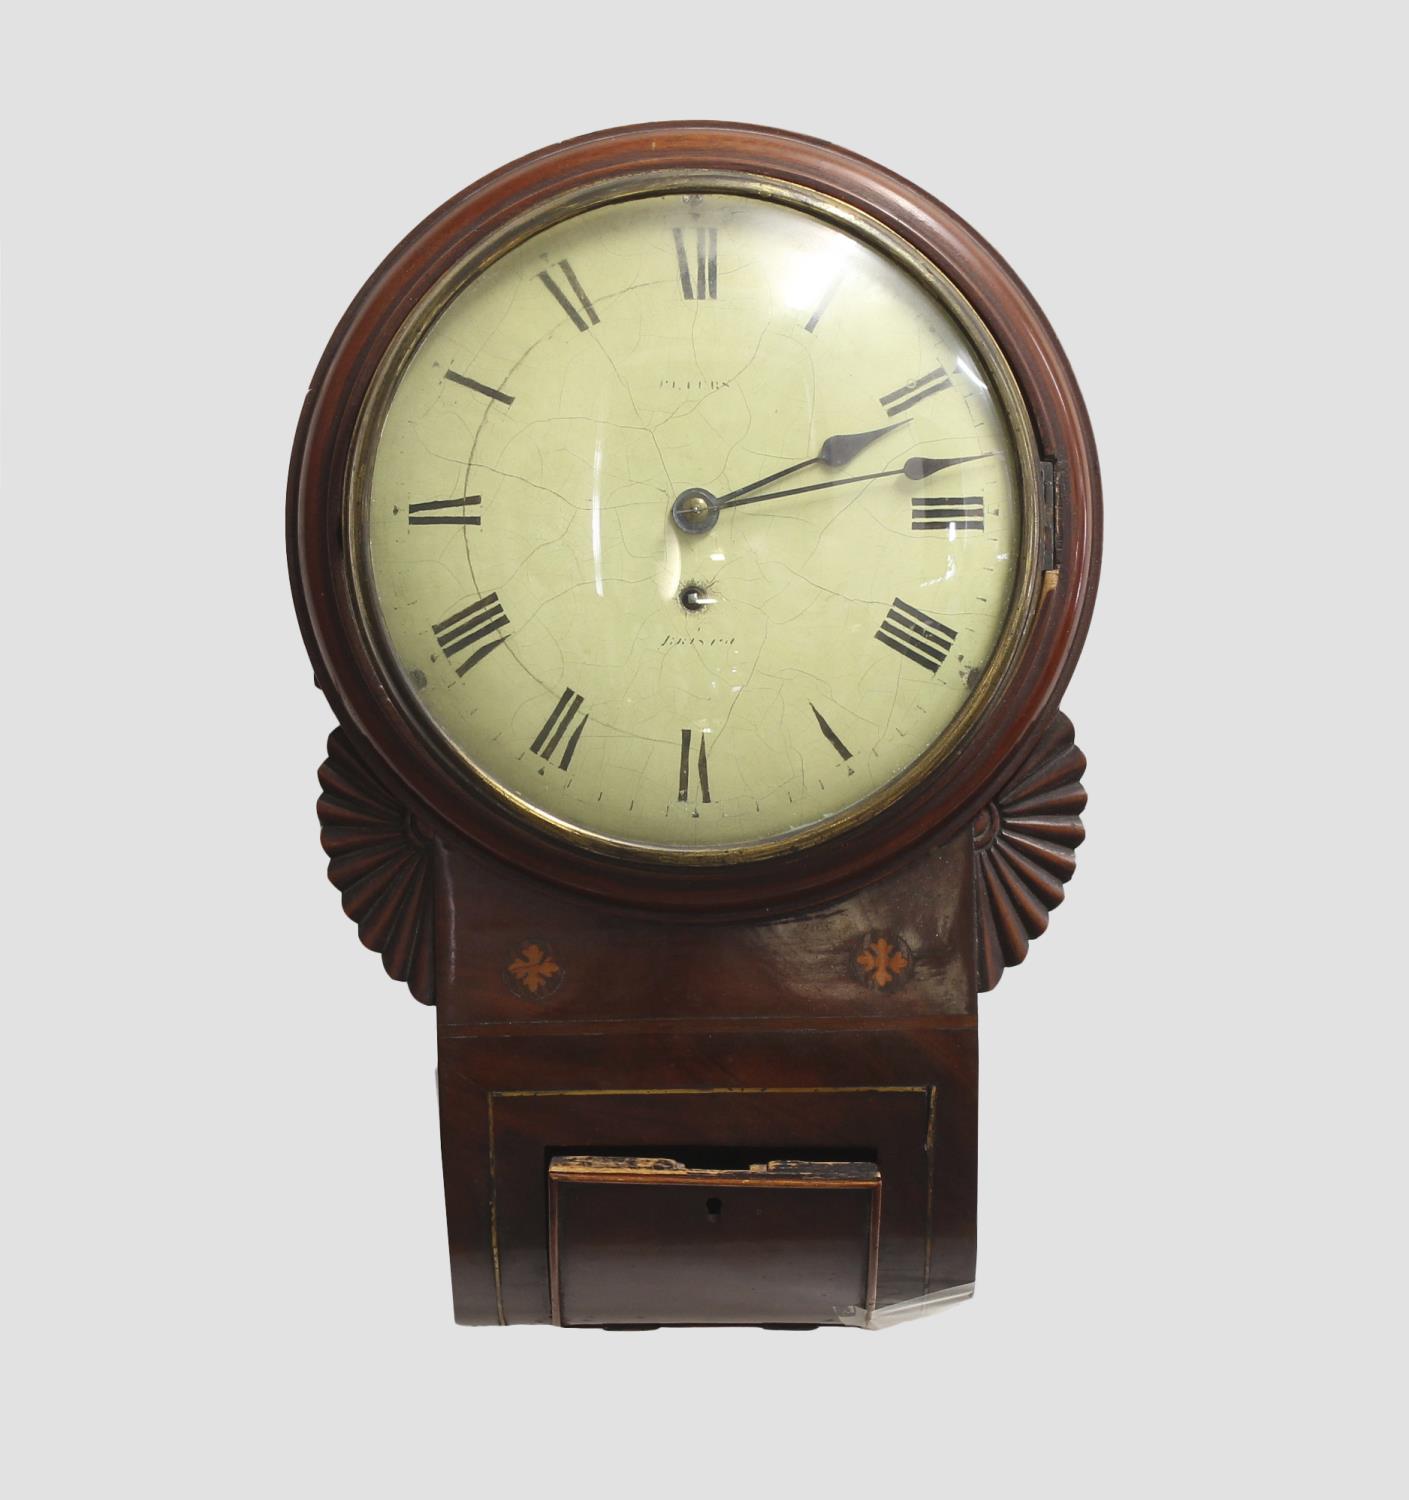 A REGENCY MAHOGANY BRISTOL MADE DROP DIAL WALL CLOCK. A mahogany cased drop dial wall clock with 9